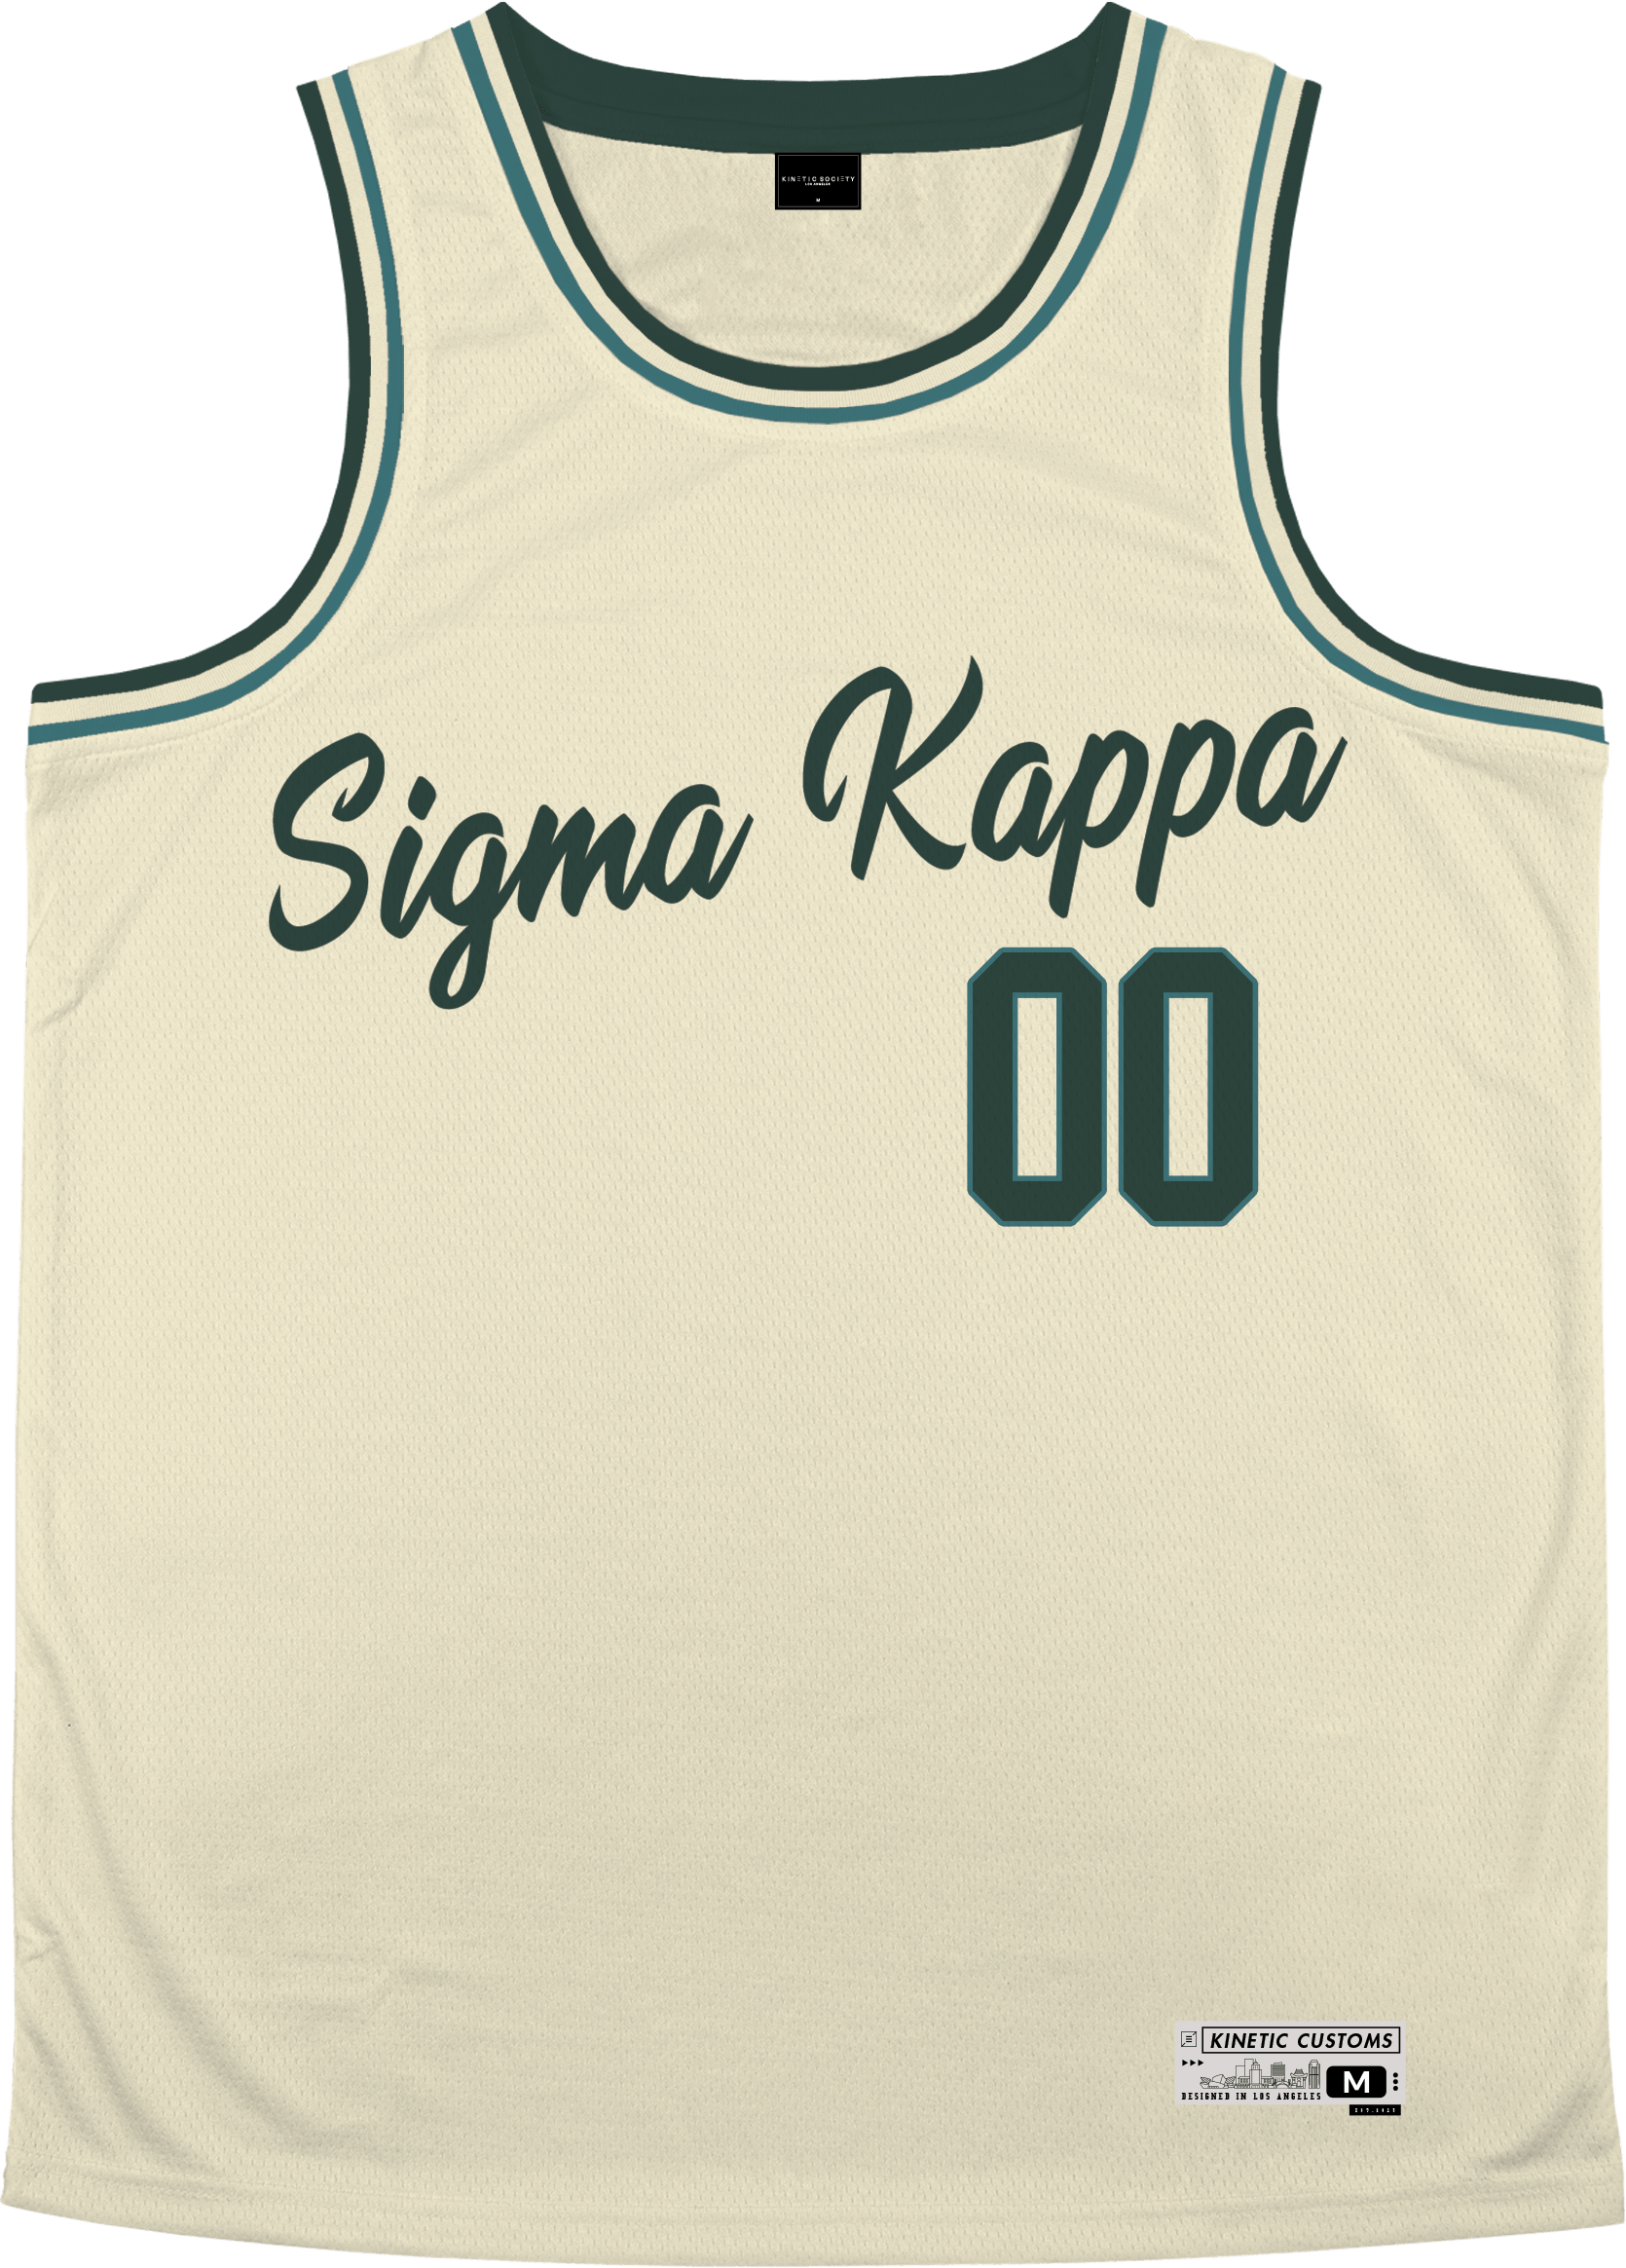 Sigma Kappa - Buttercream Basketball Jersey Premium Basketball Kinetic Society LLC 